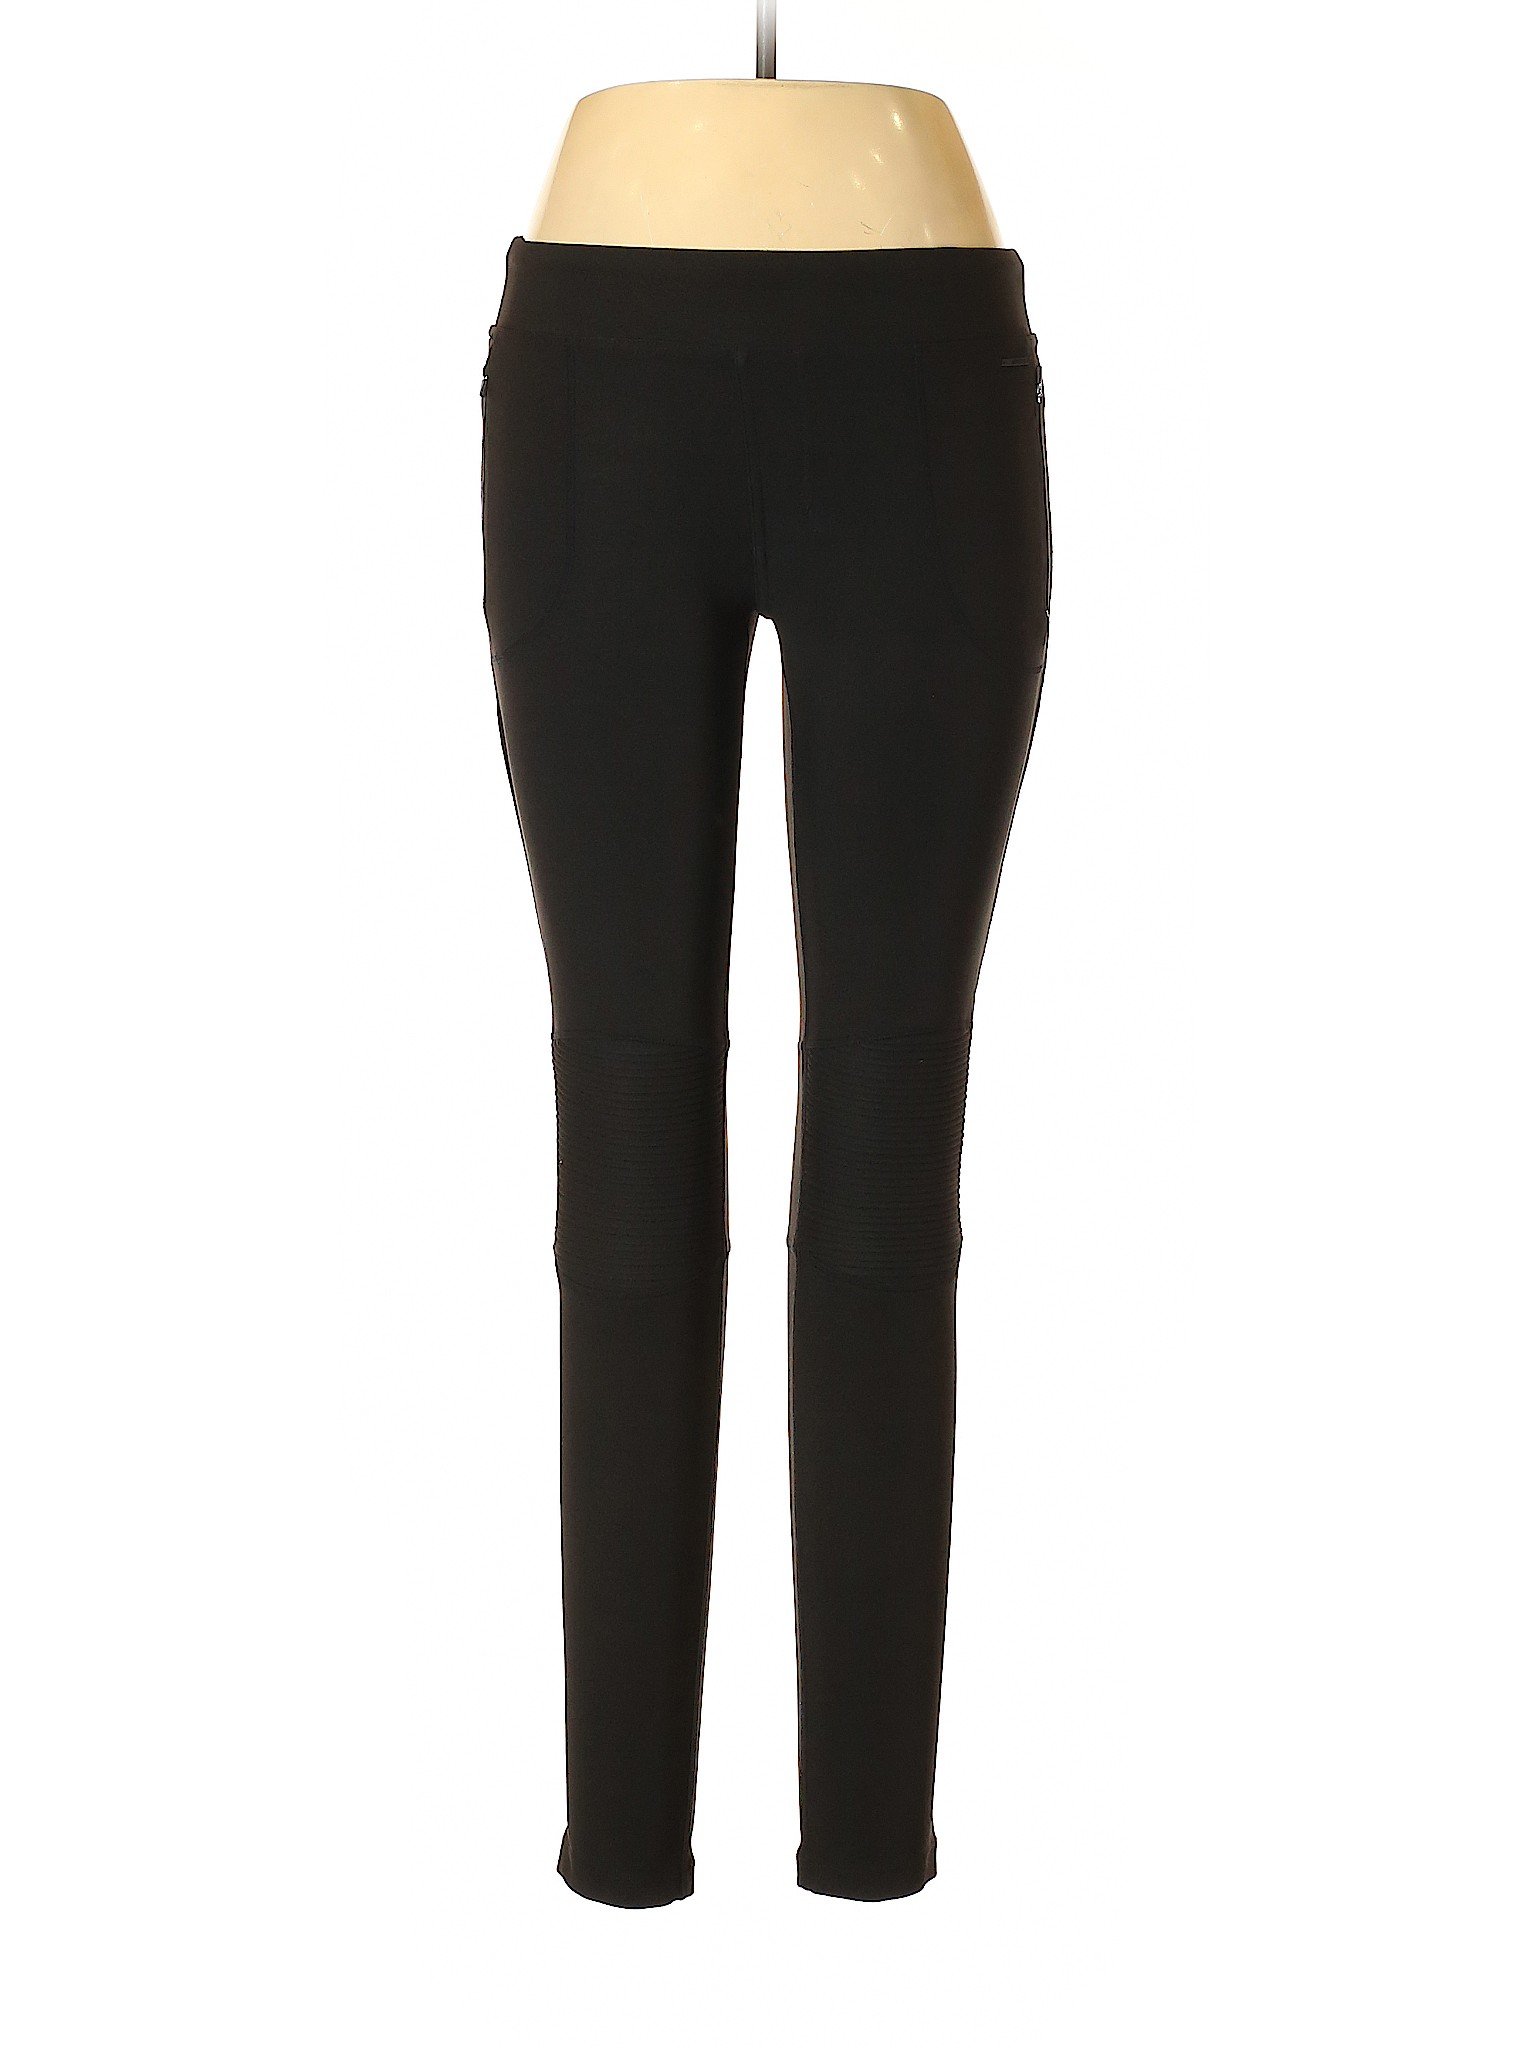 Mondetta Solid Black Active Pants Size L - 60% off | thredUP